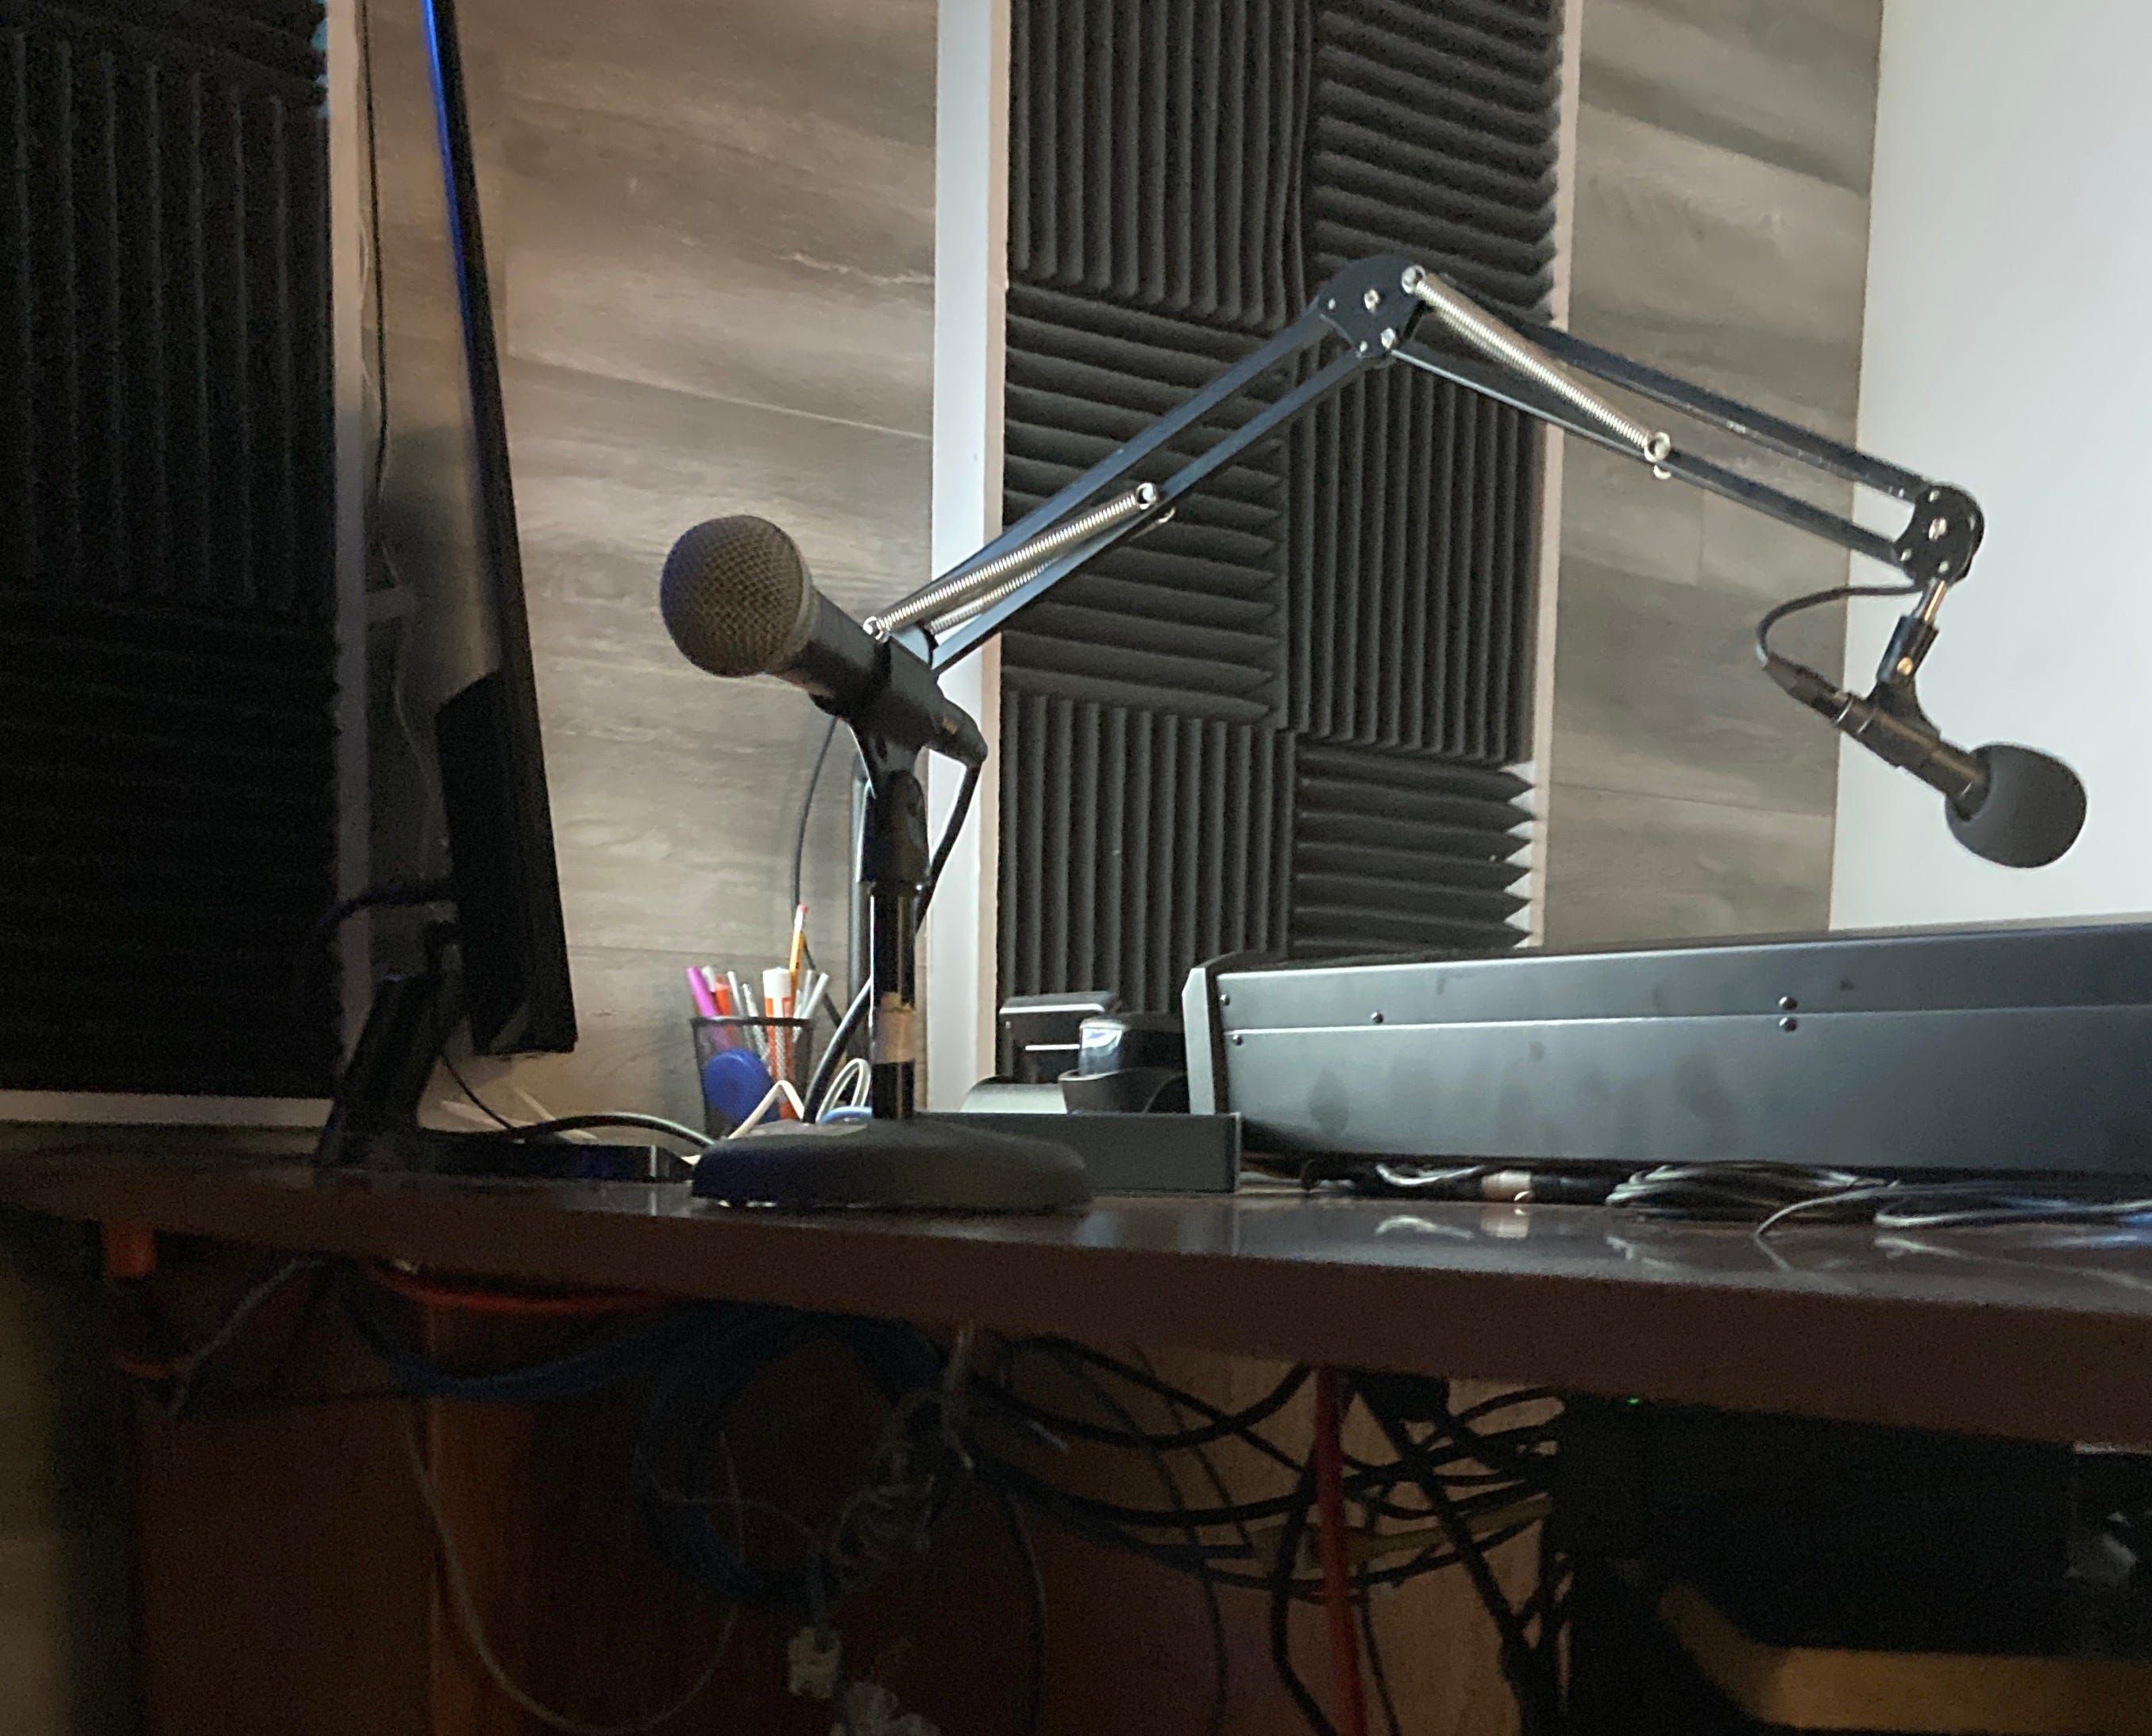 Radio Indígena's programming booth in Oxnard enables radio communicators to transmit 21 programs each week. Image by Julia Knoerr. United States, 2020.